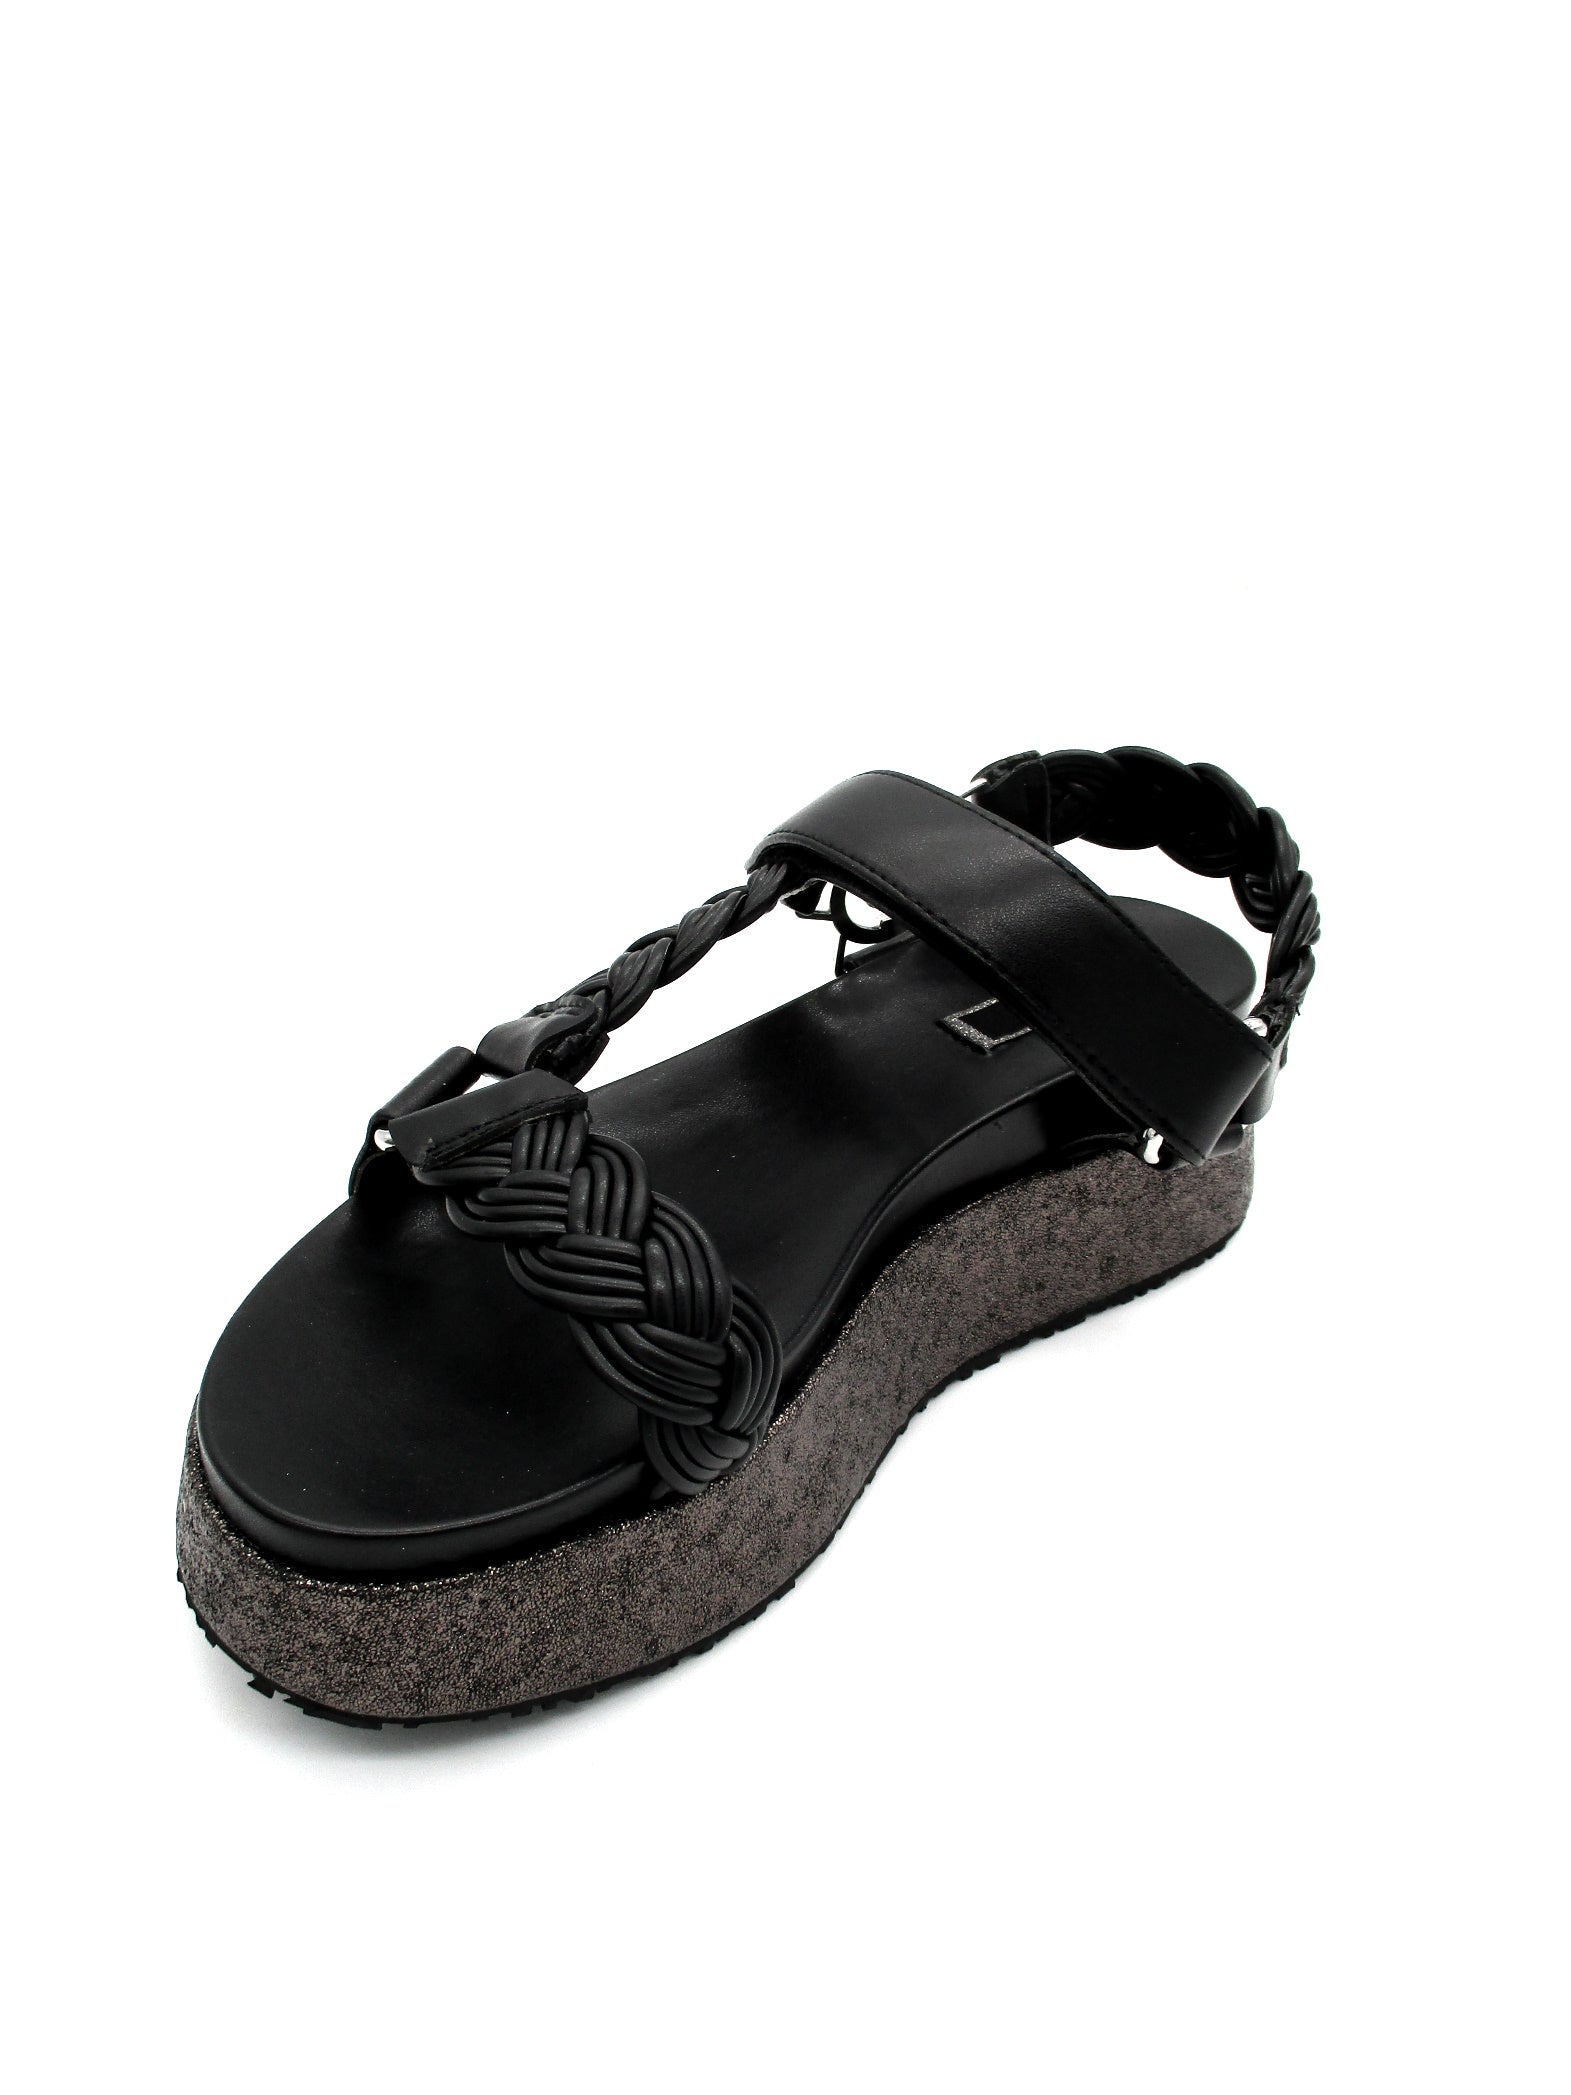 Sandalo Frida 20 LIU JO Black